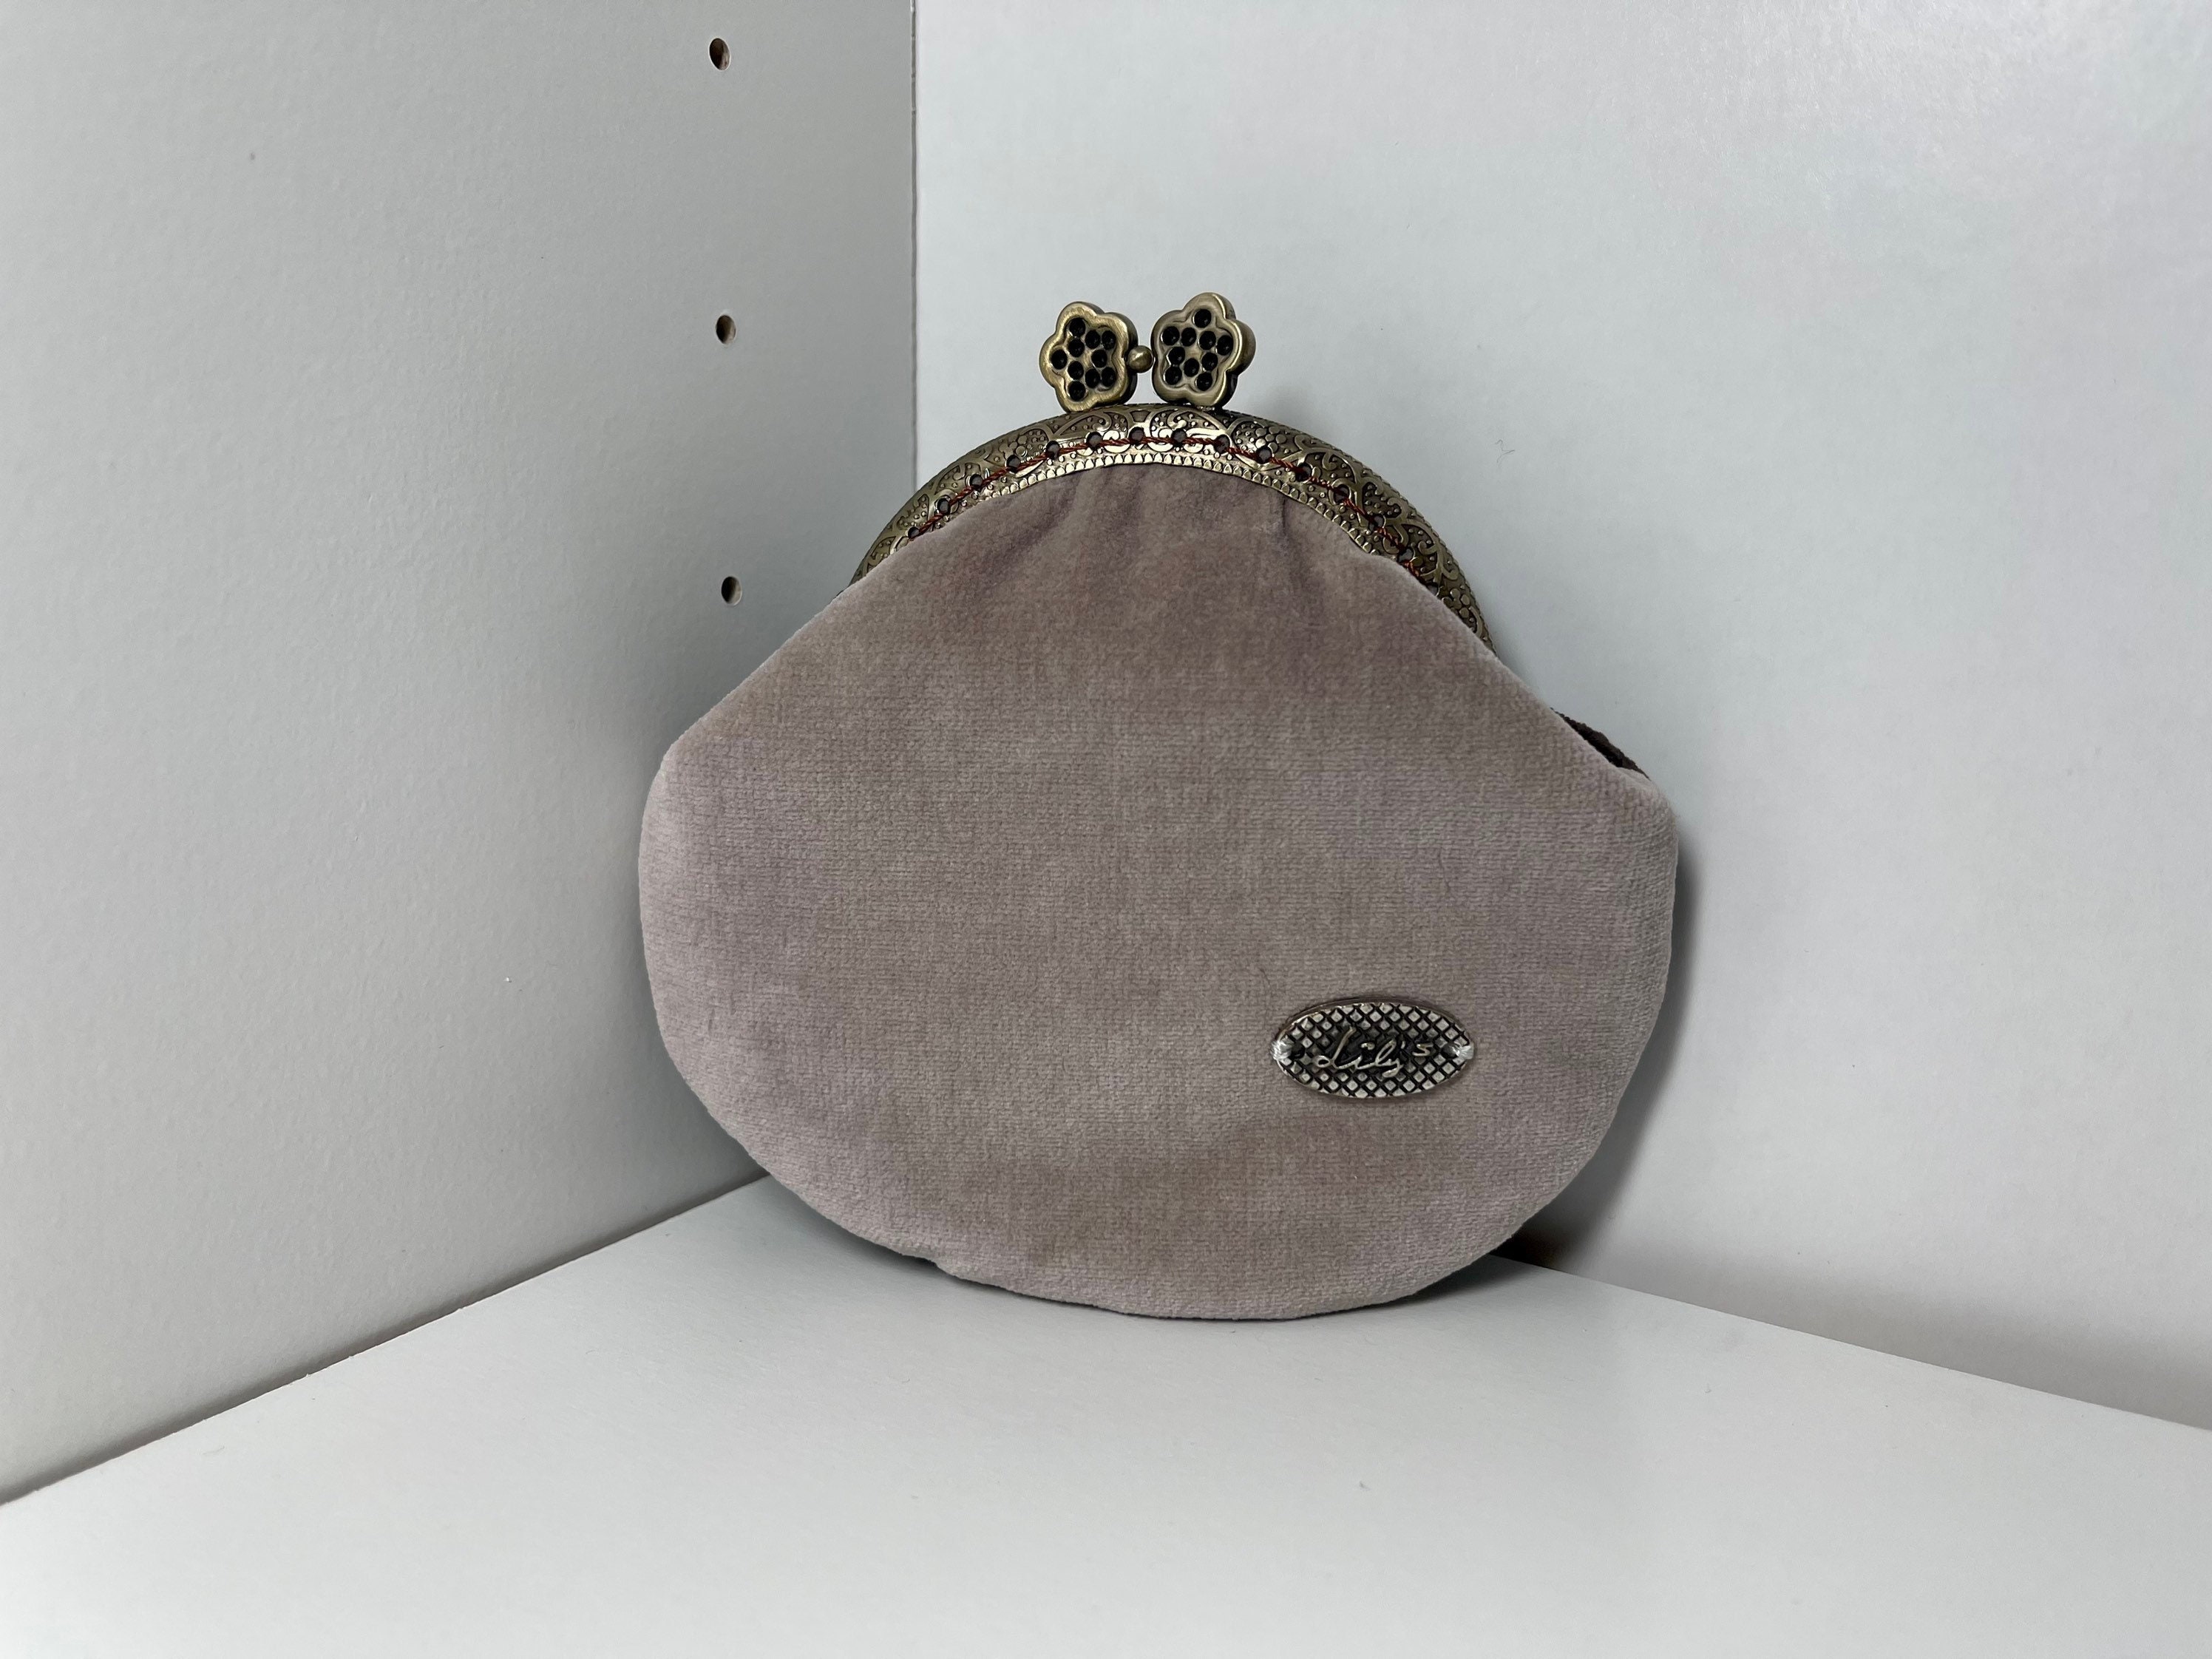 Kiss lock clasp purse • clasp coin purse • leather coin purse